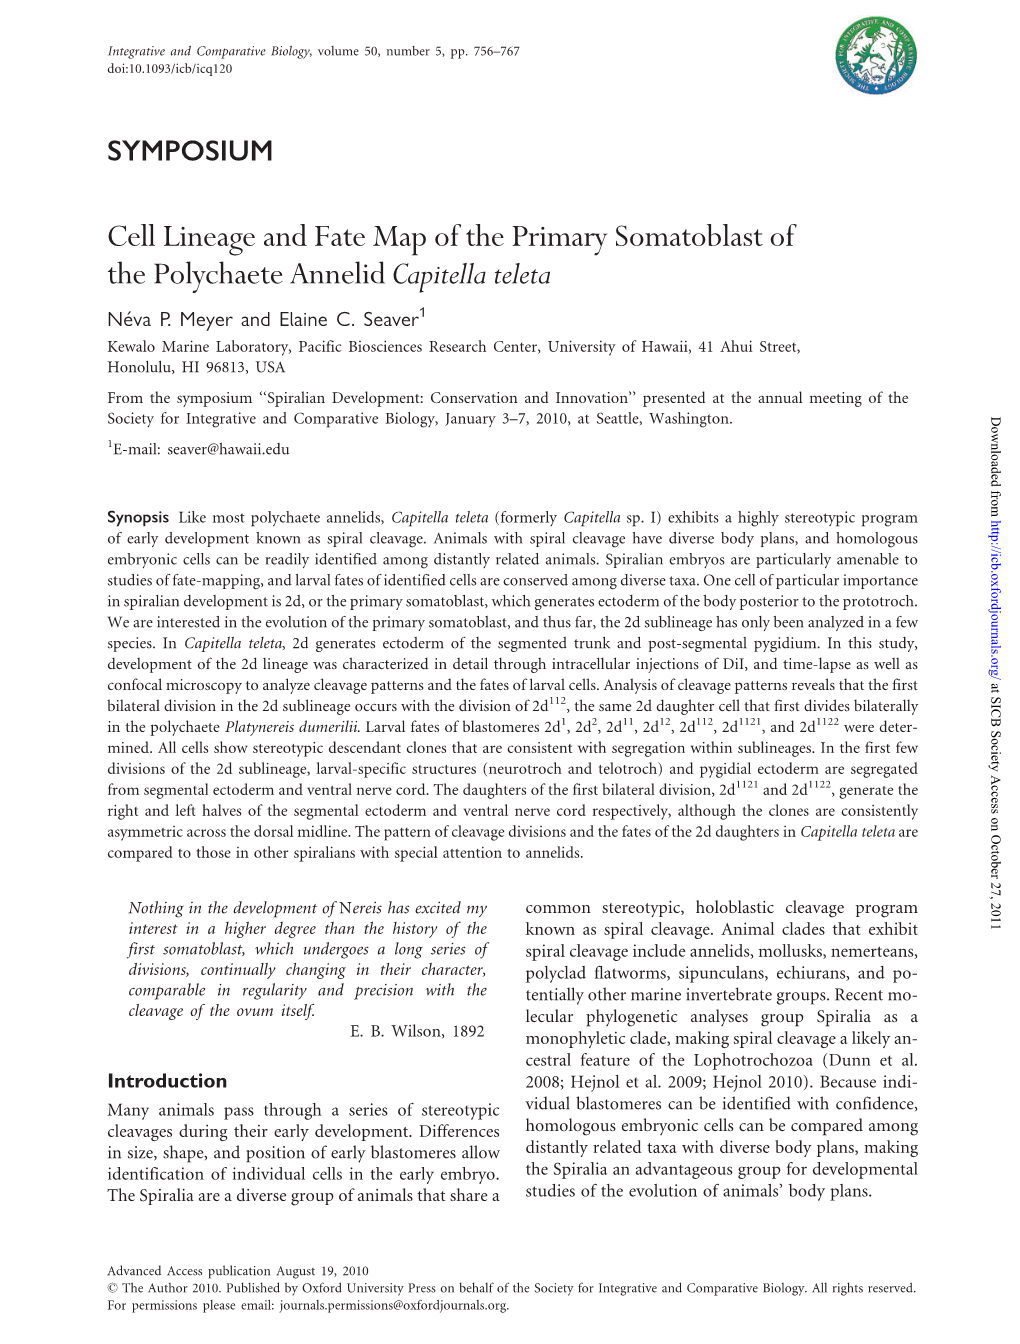 Cell Lineage and Fate Map of the Primary Somatoblast of the Polychaete Annelid Capitella Teleta Ne´Va P